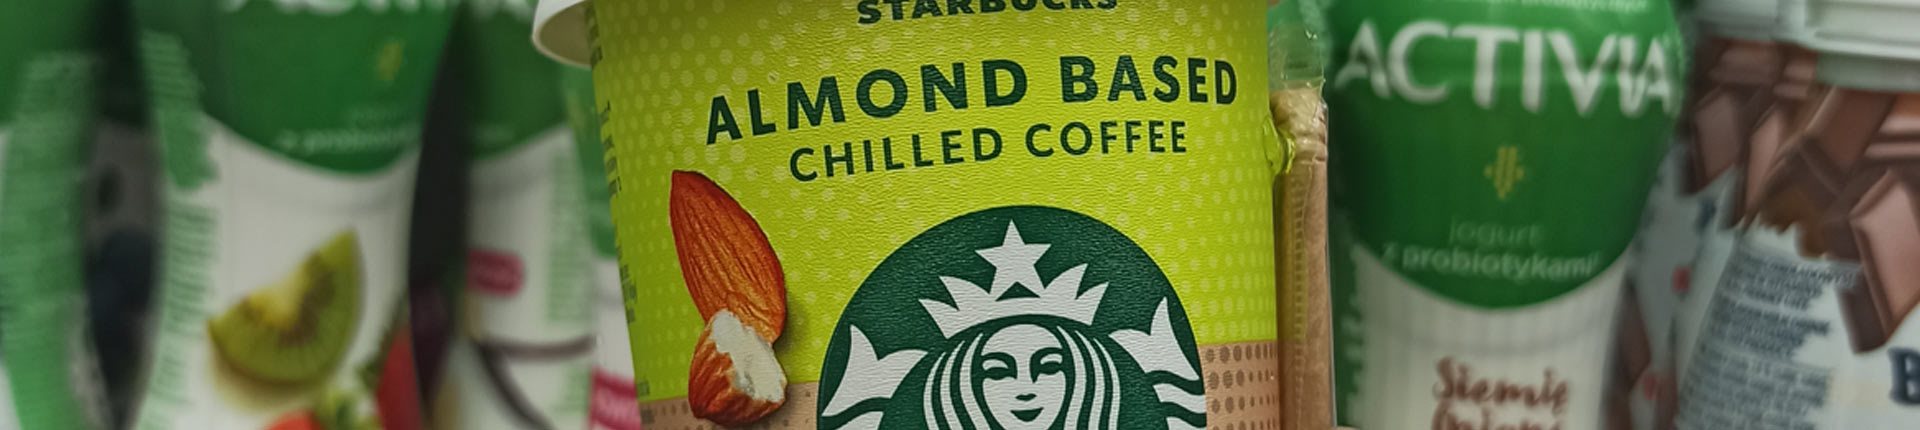 Almond based chilled coffee Starbucks - ocena produktu